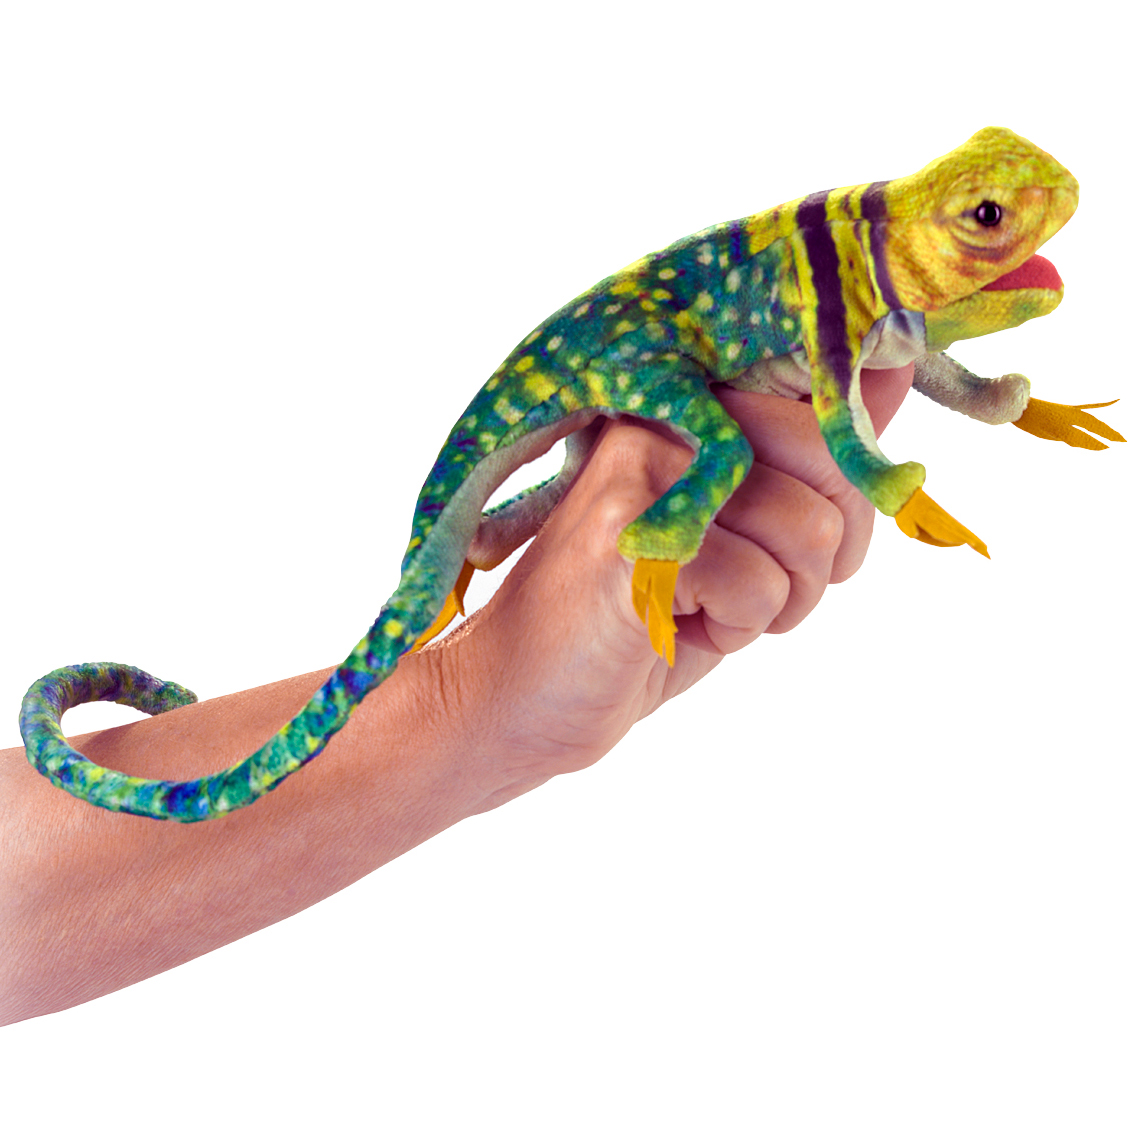 Folkmanis finger puppet mini collared lizard